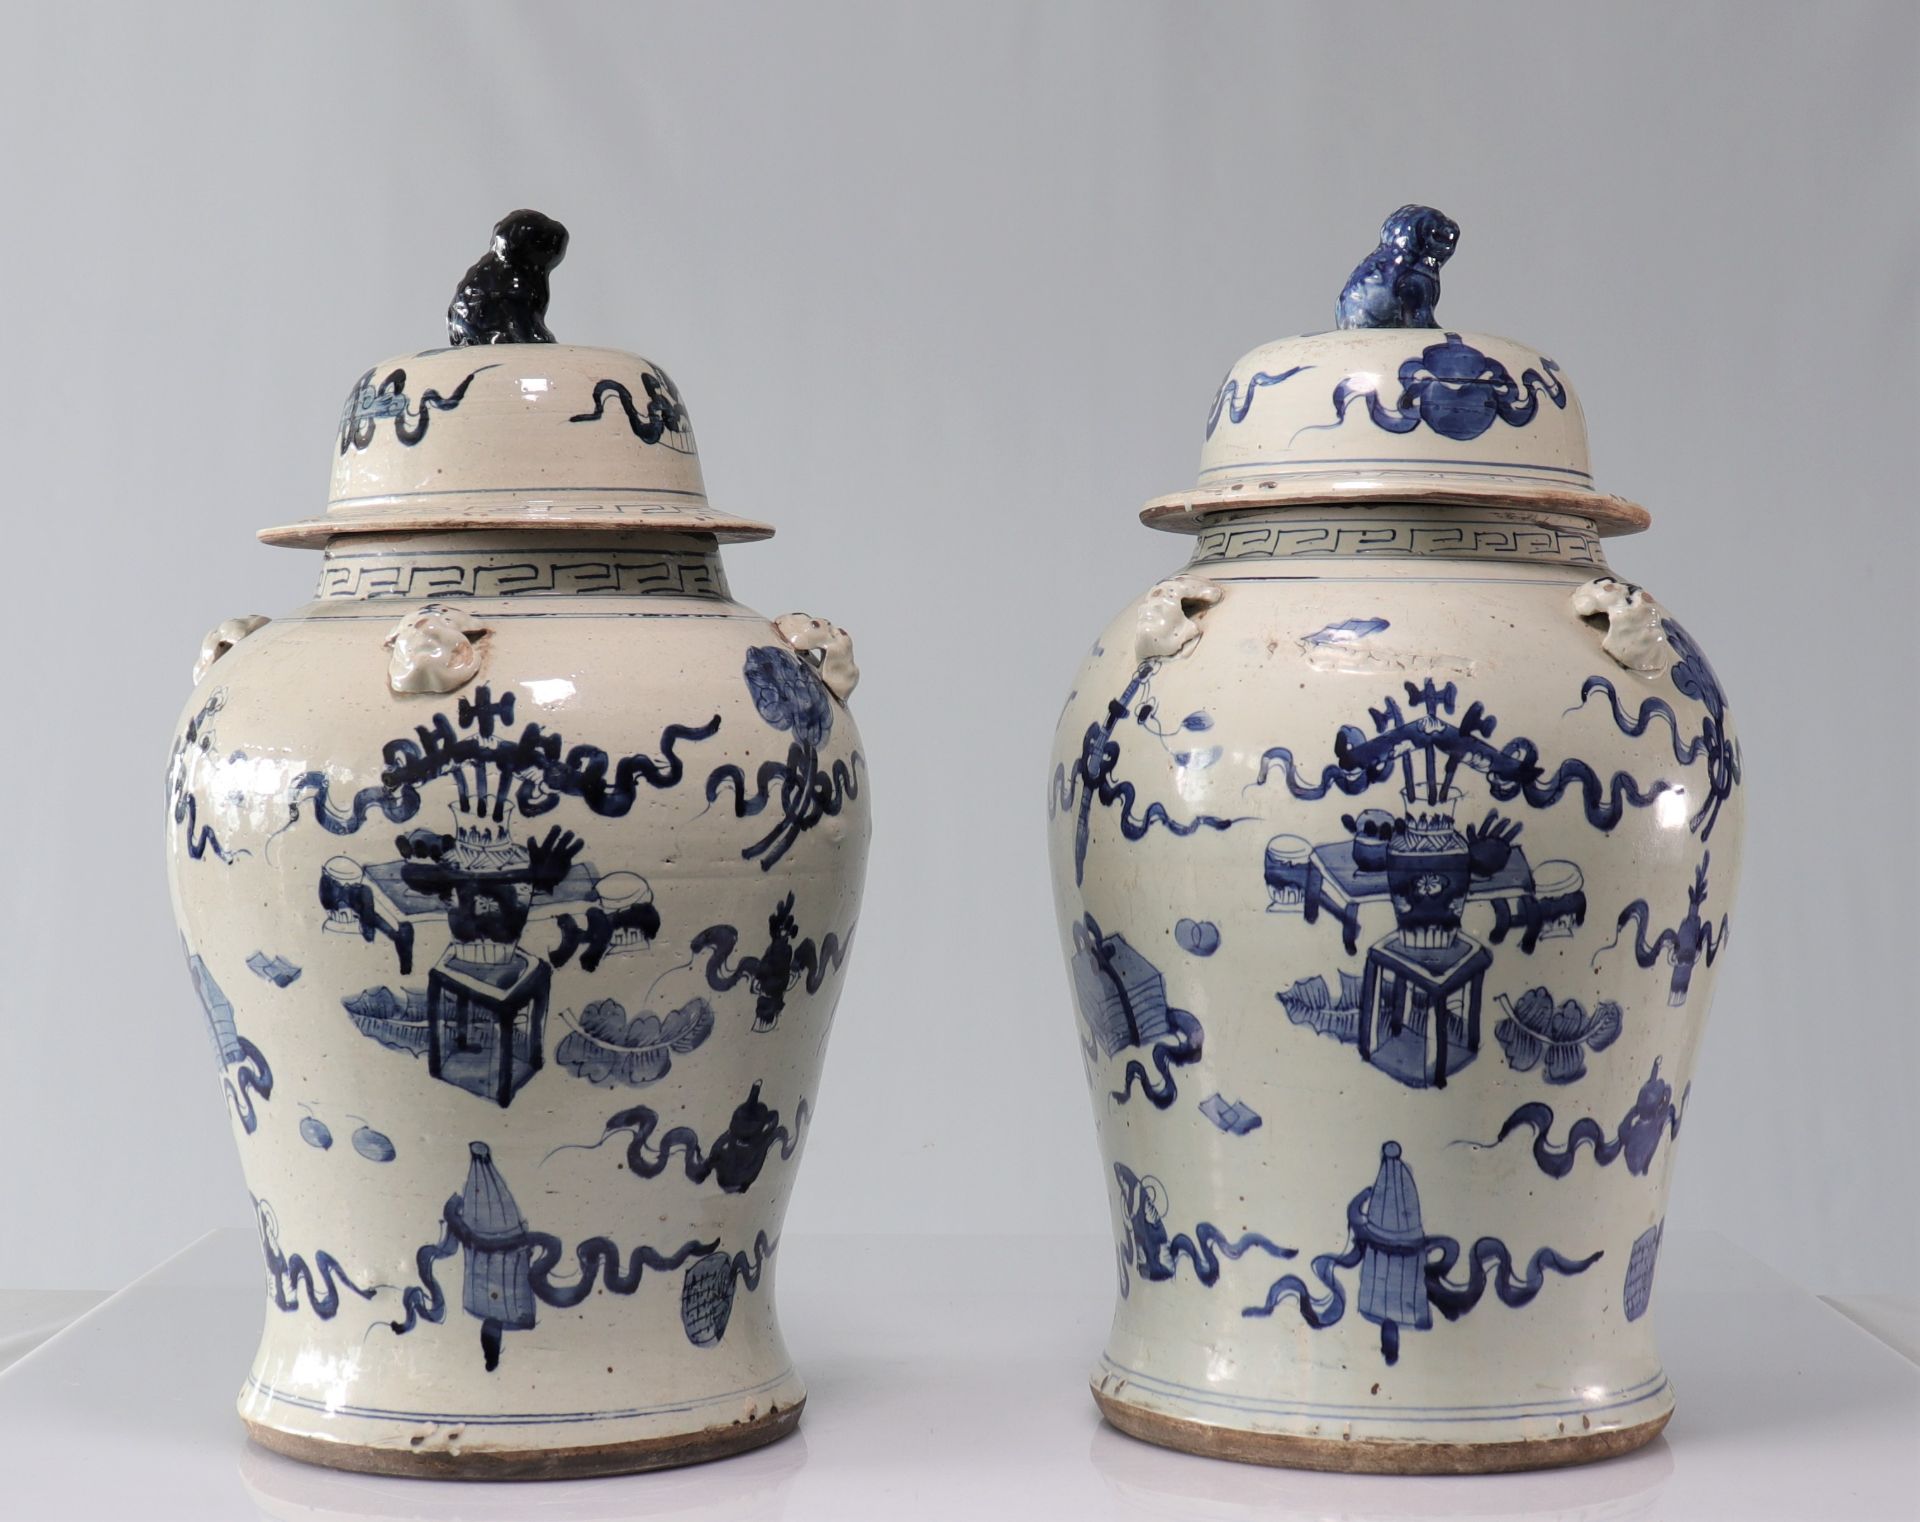 Pair of covered vases in "blanc-bleu" porcelain furniture decor - Image 2 of 3